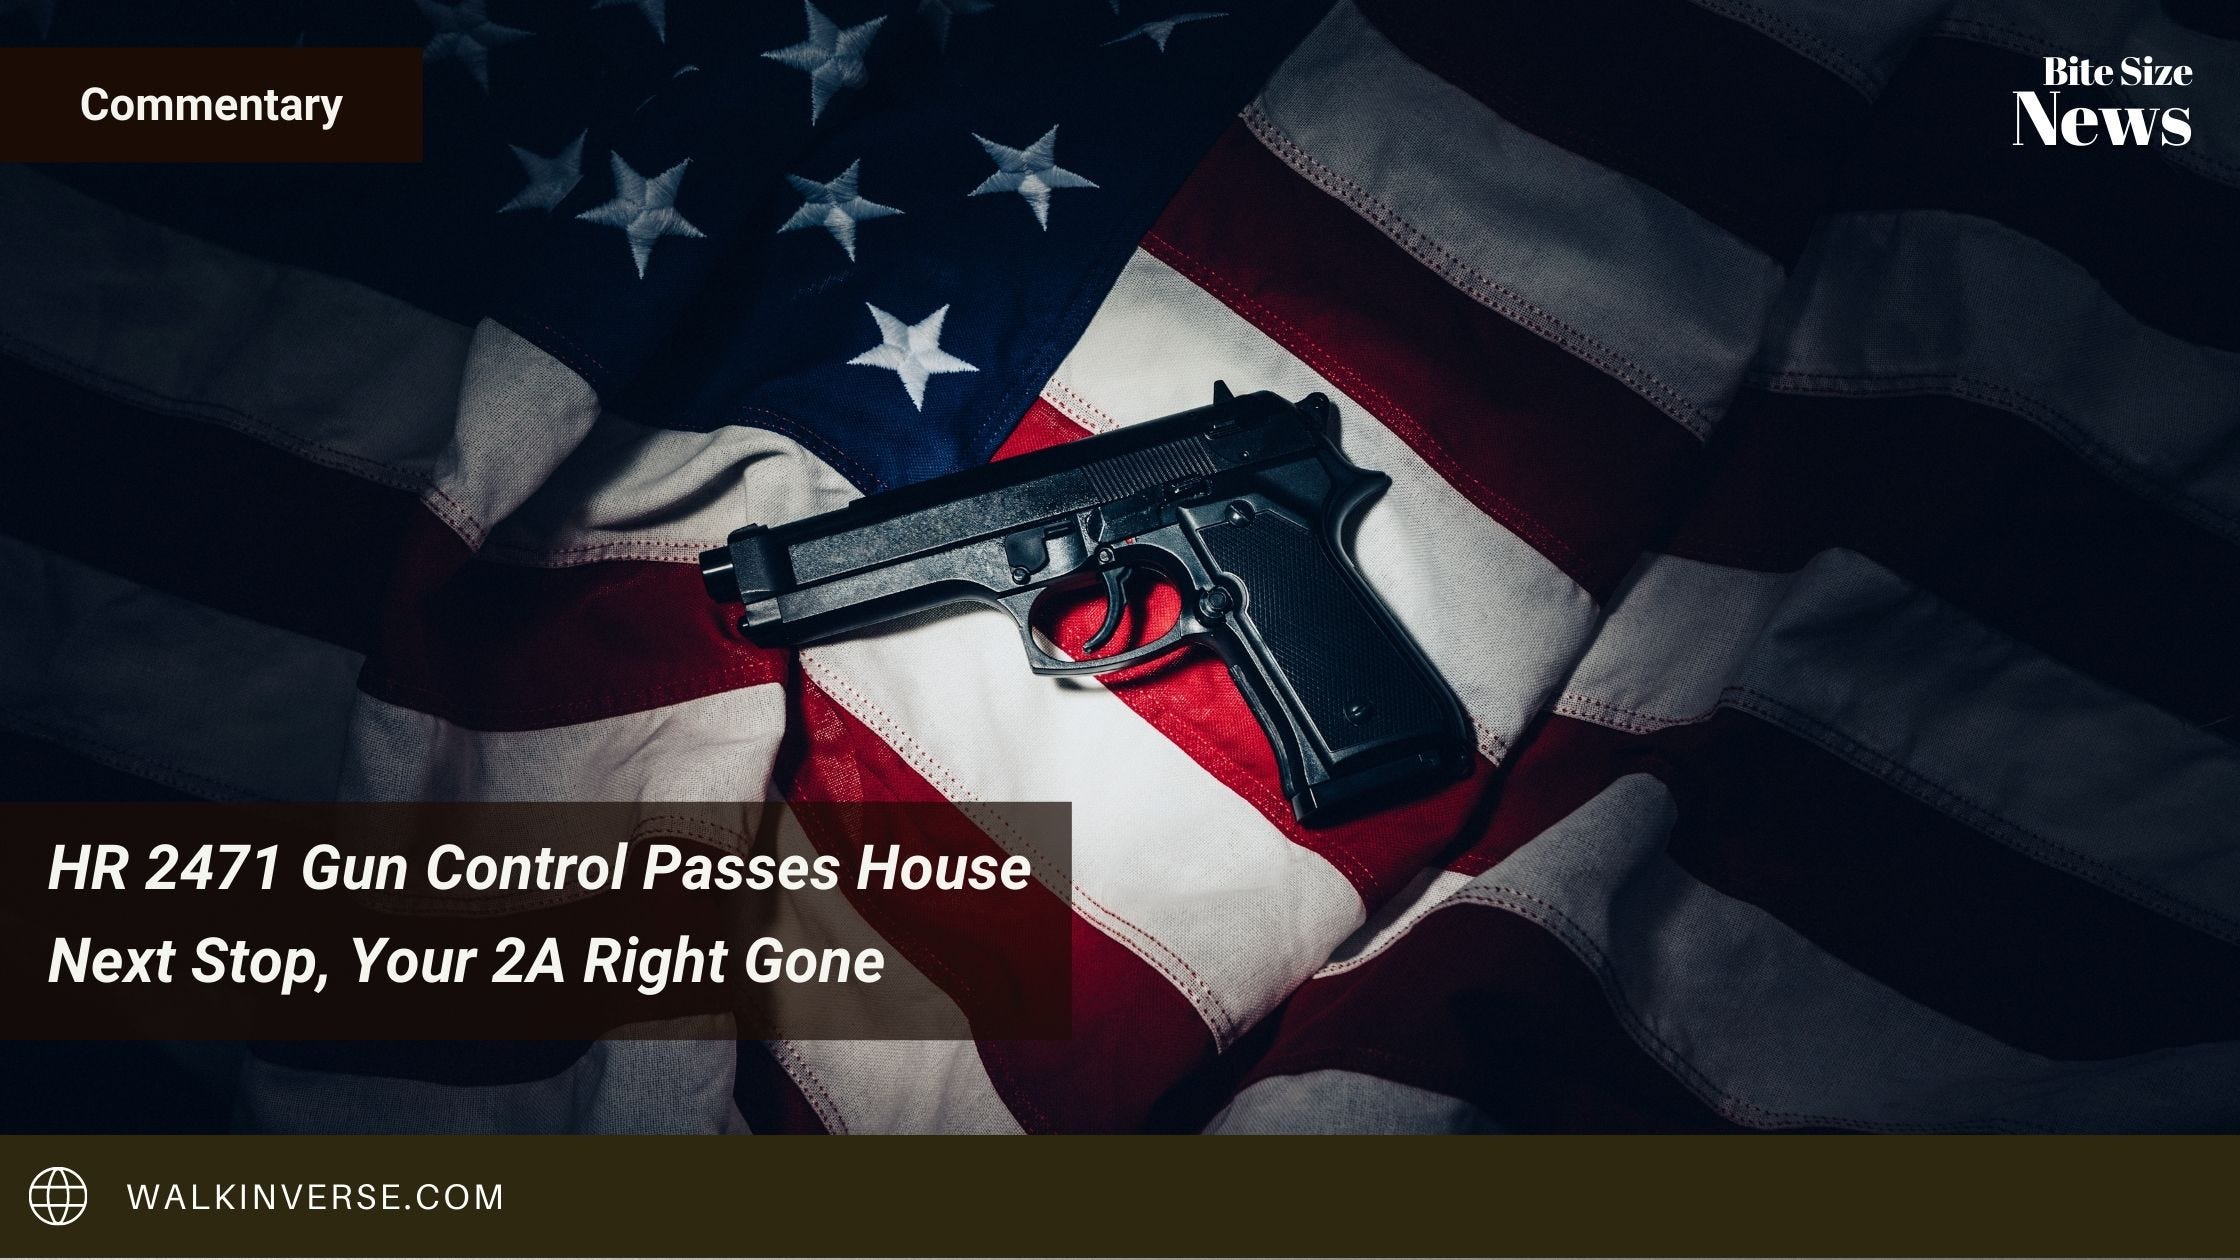 HR 2471 Gun Control Passes House